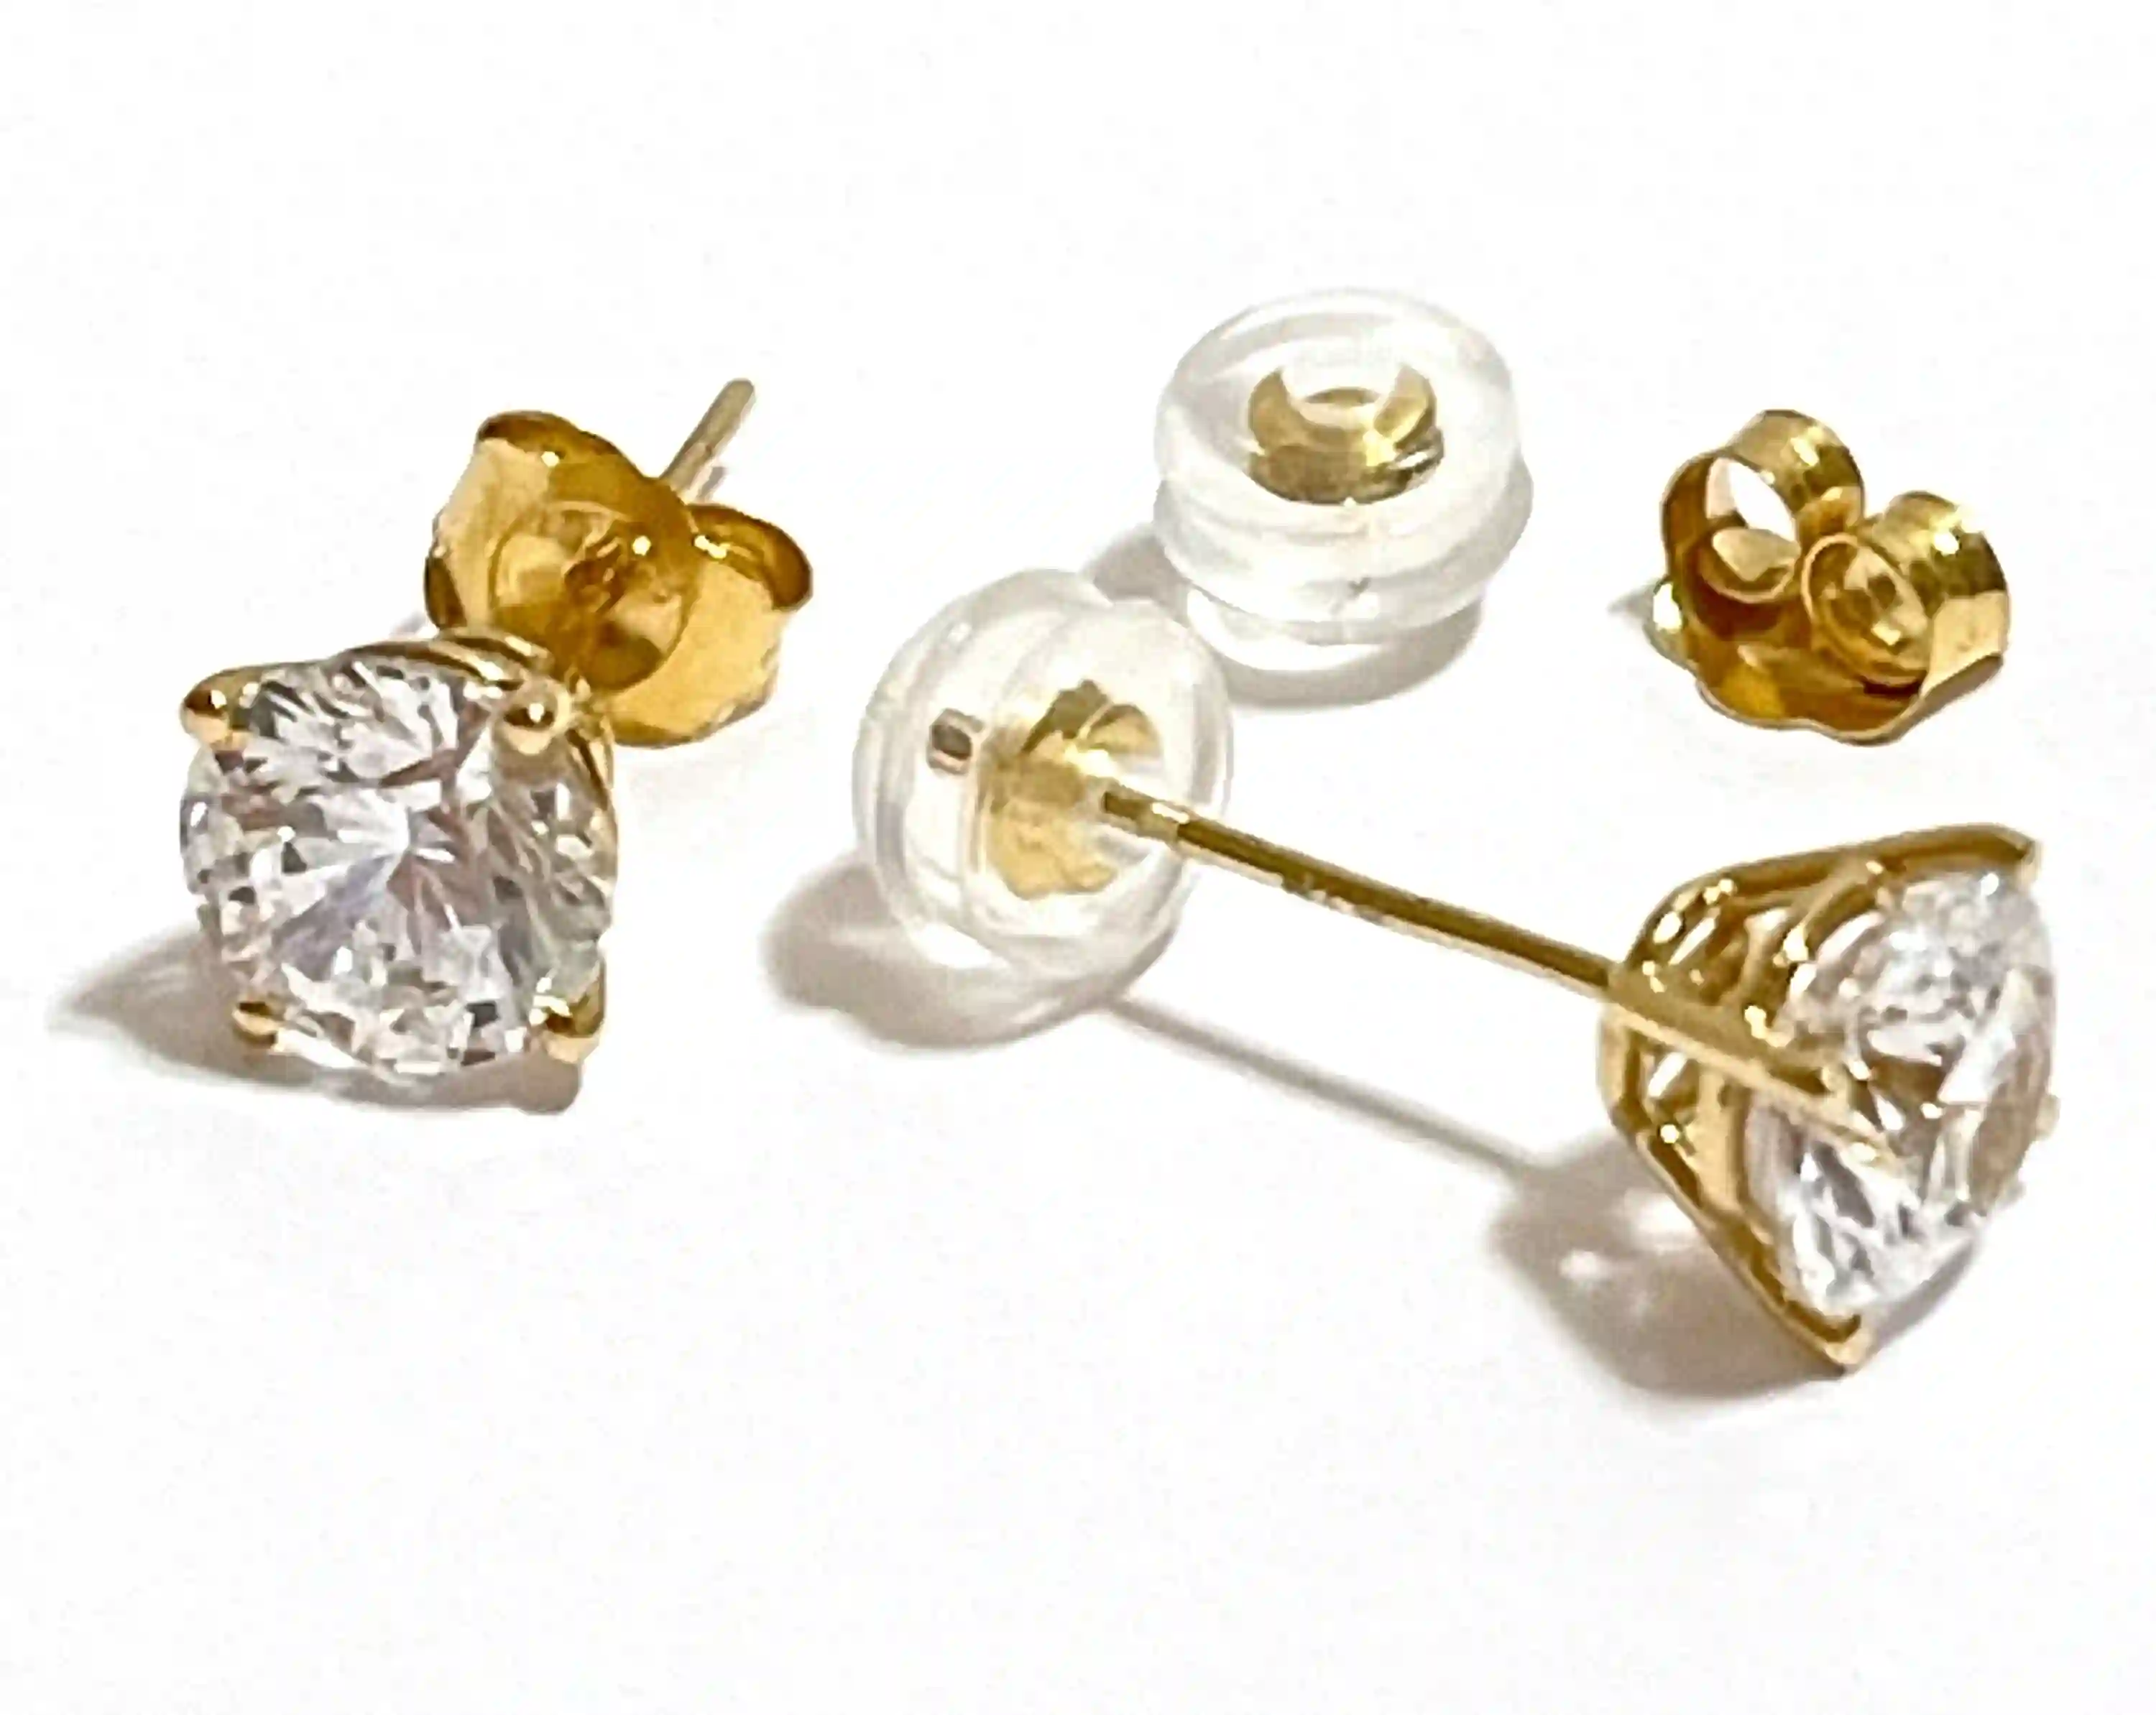 Solid 18kt Gold Designer Earrings Studs 2 carat Diamond Solitaire White Gold Earrings 6.5mm Round Diamond Studs - HANDMADE Diamond Jewelry 